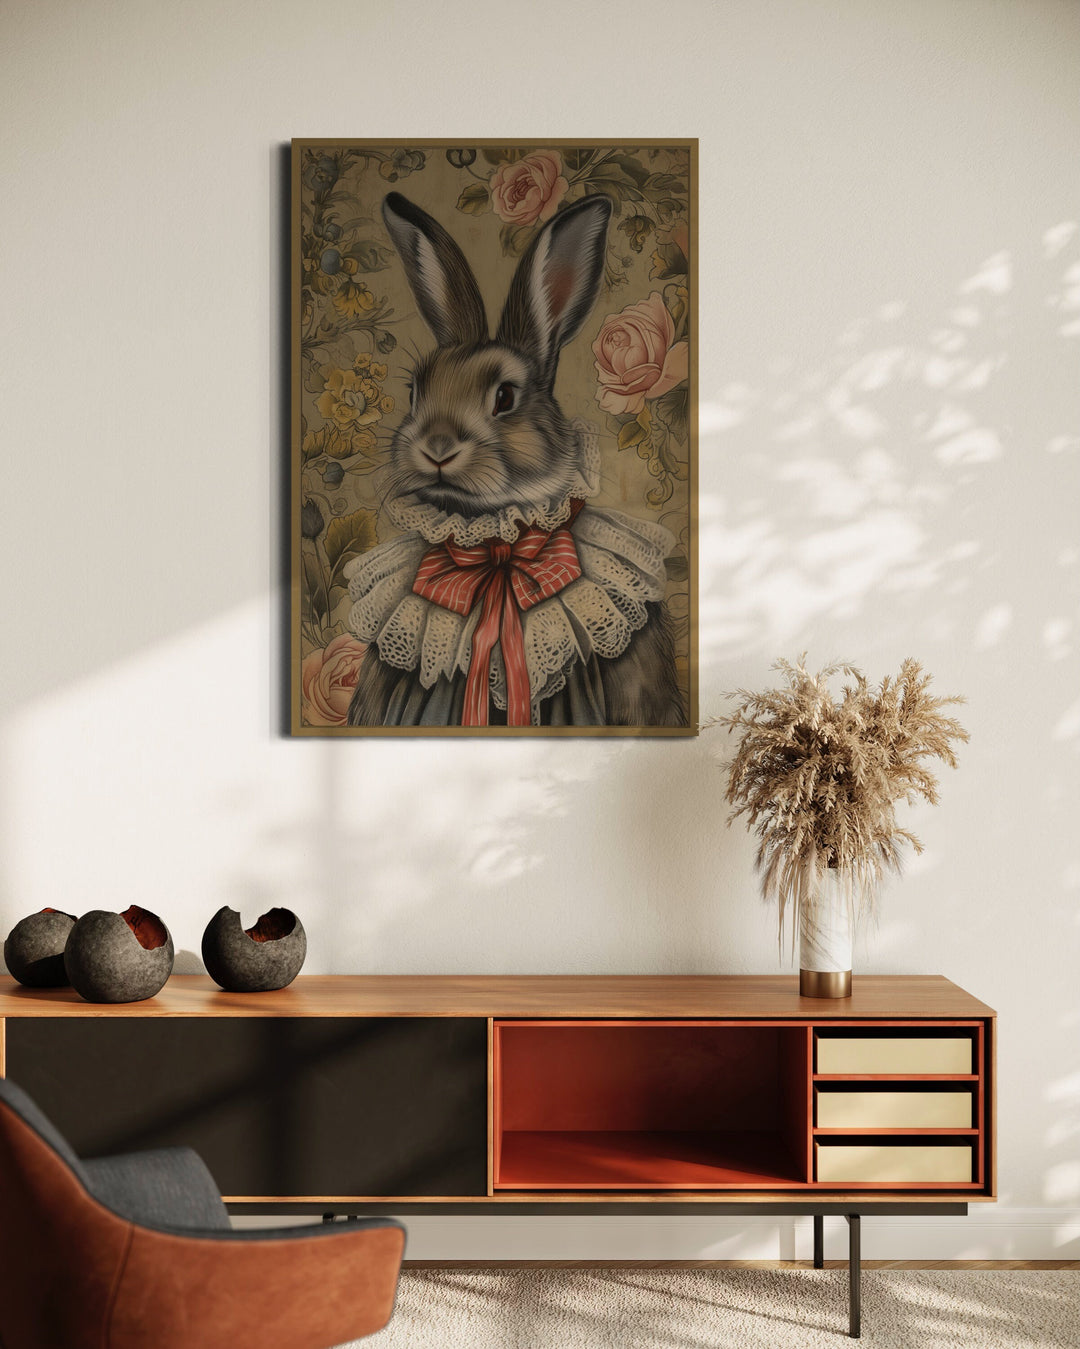 Victorian Bunny Portrait Framed Canvas Wall Art in living room